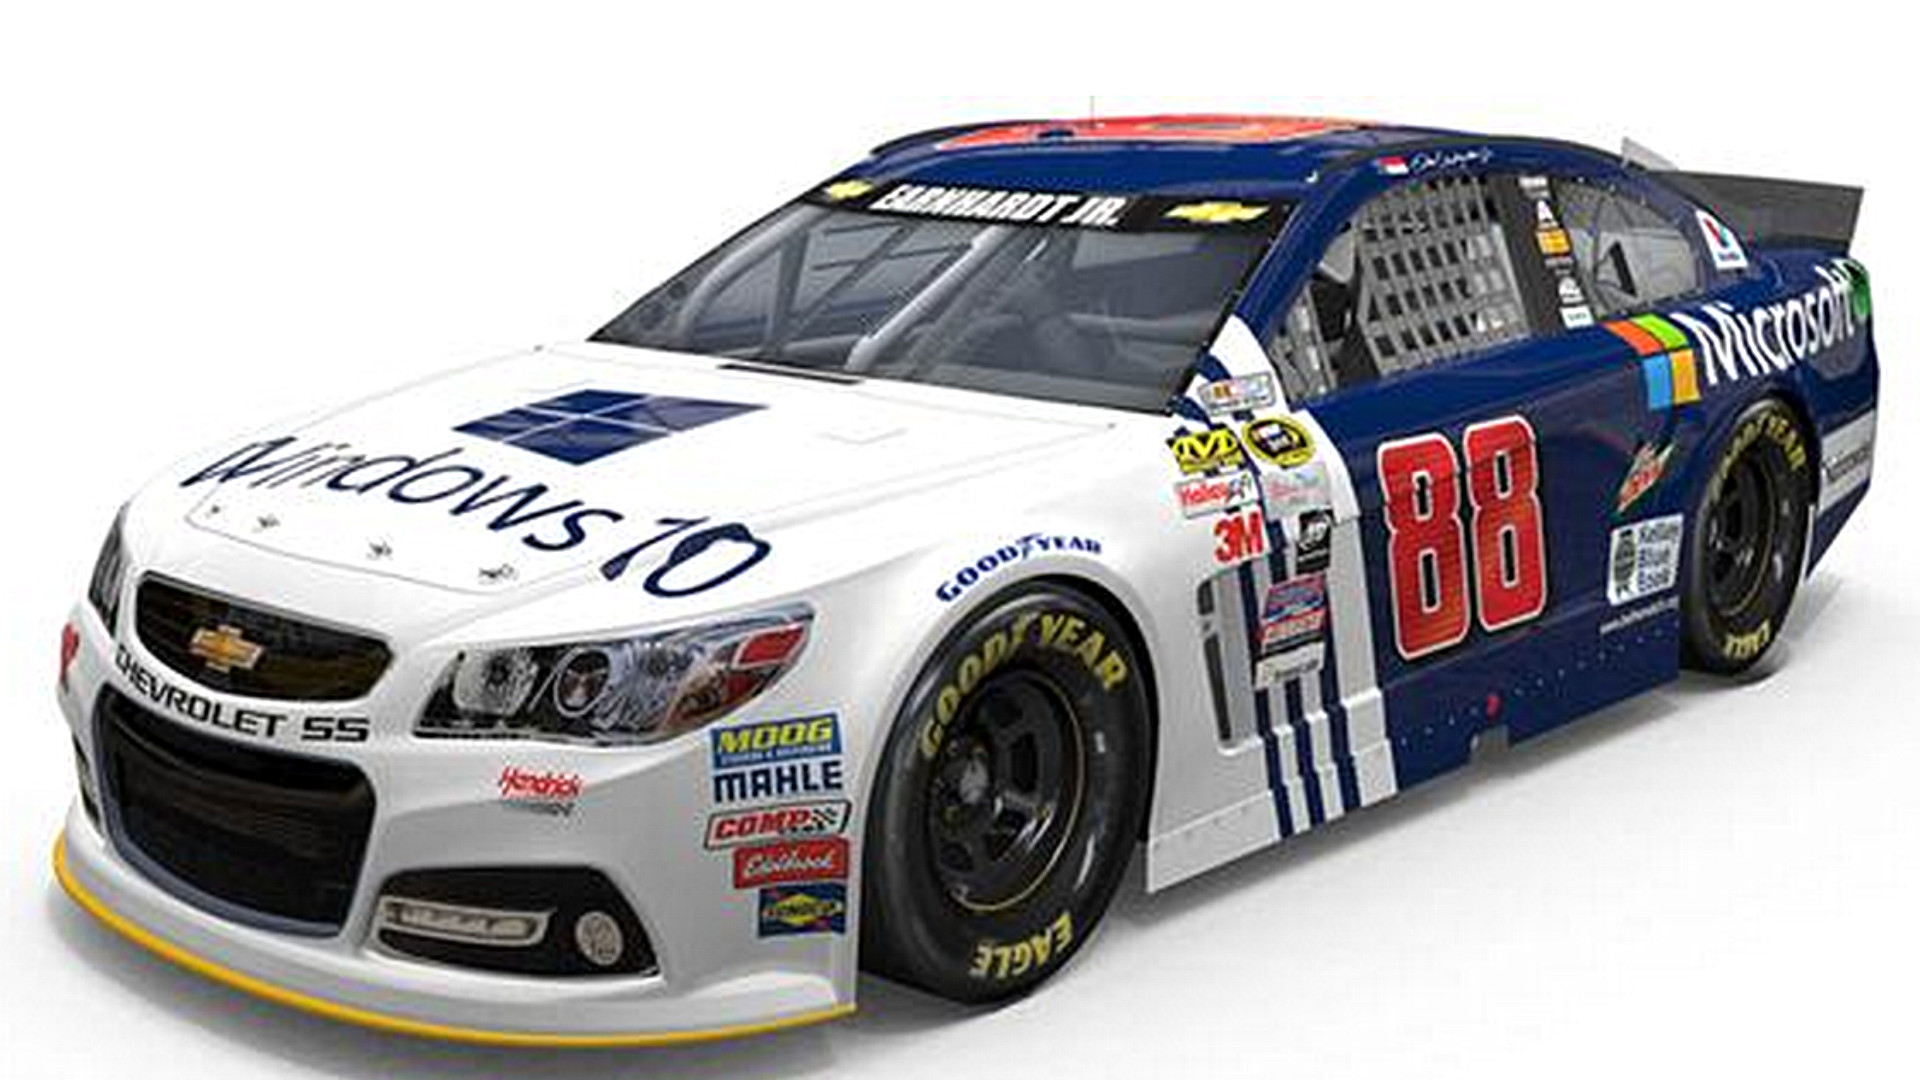 1920x1080 Dale Earnhardt Jr. gets new sponsor in Microsoft | NASCAR | Sporting News